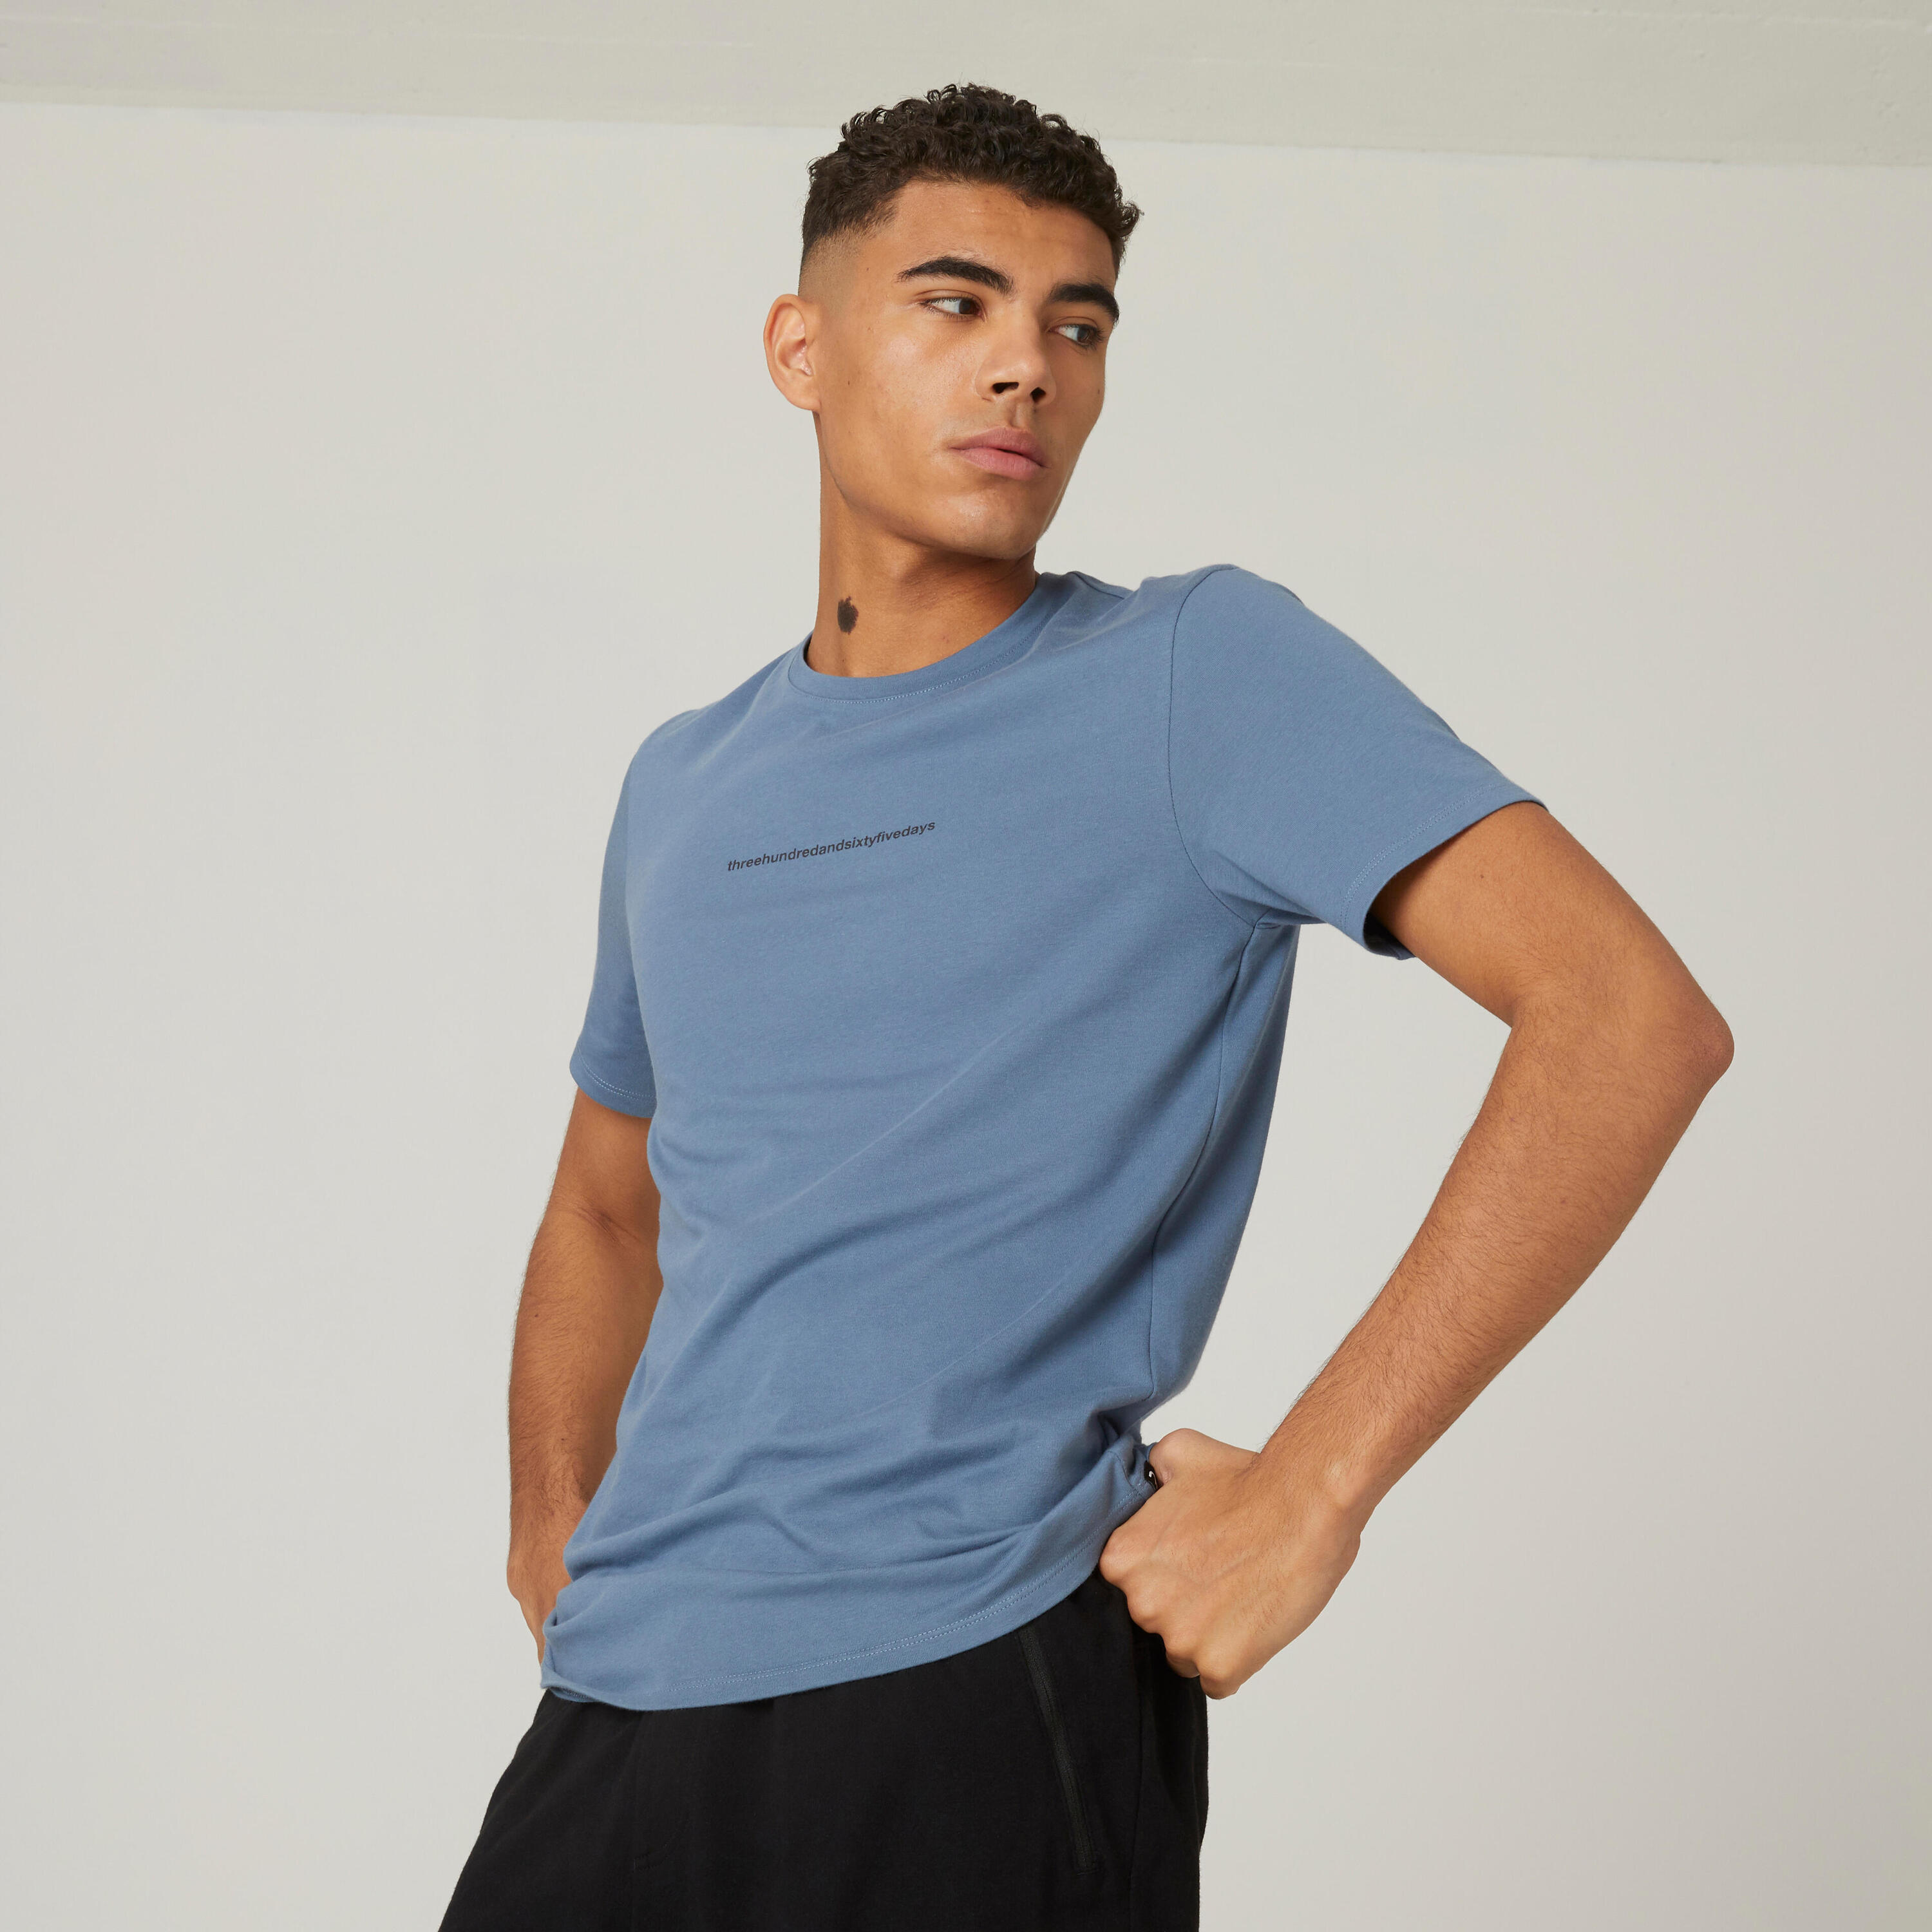 DOMYOS Slim-Fit Stretch Cotton Fitness T-Shirt